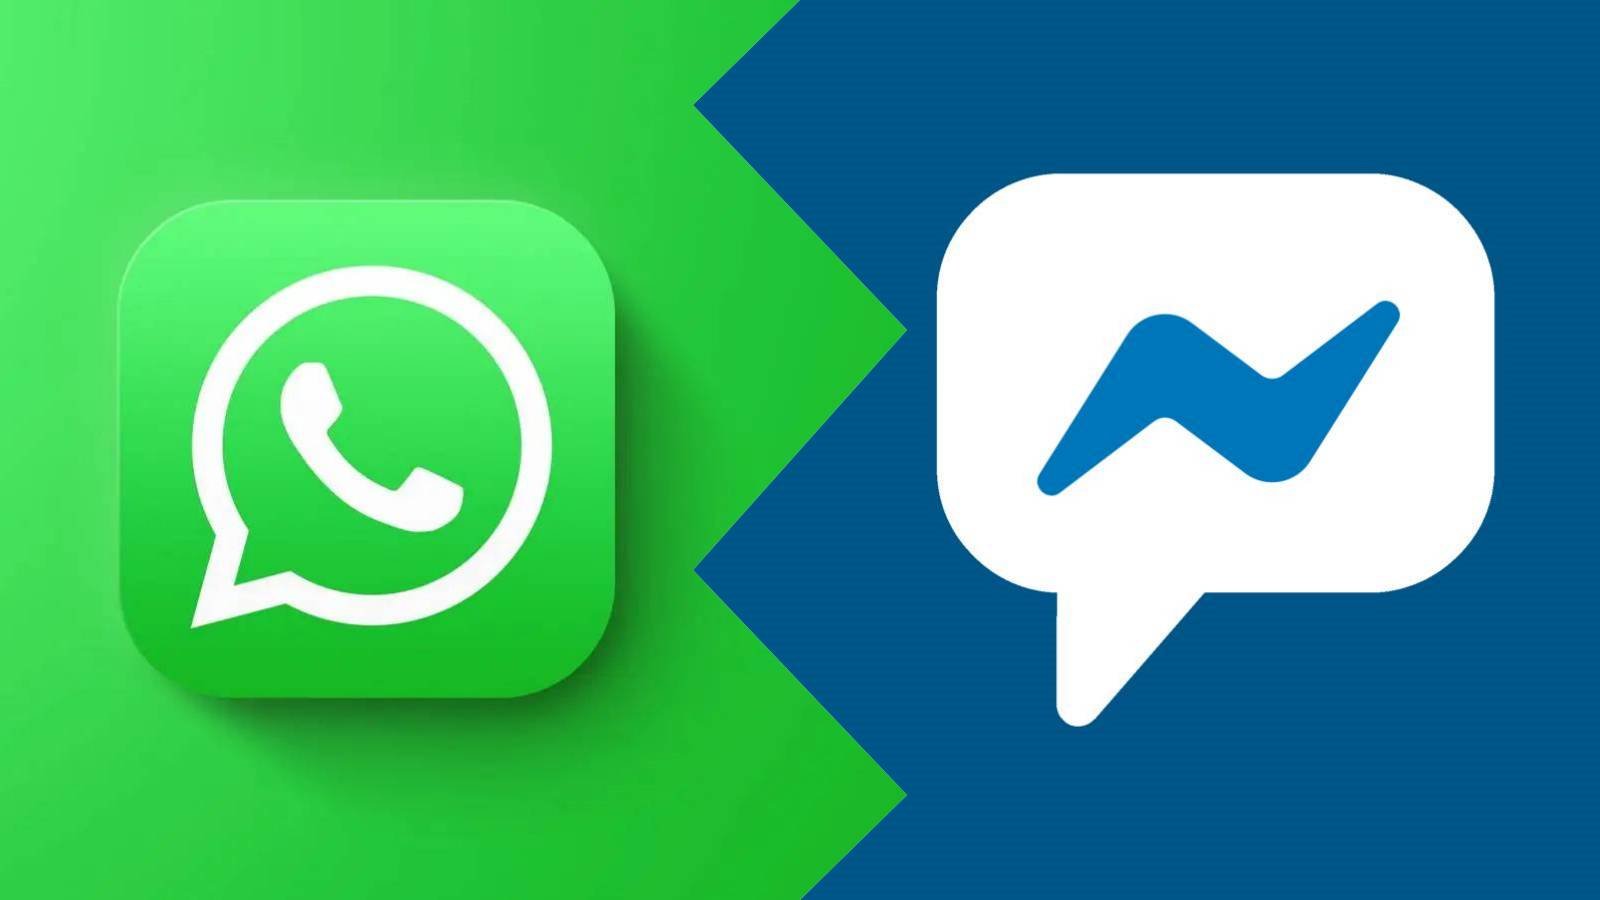 WhatsApp Facebook Messenger Cambios Importantes Marzo Europa iPhone Android